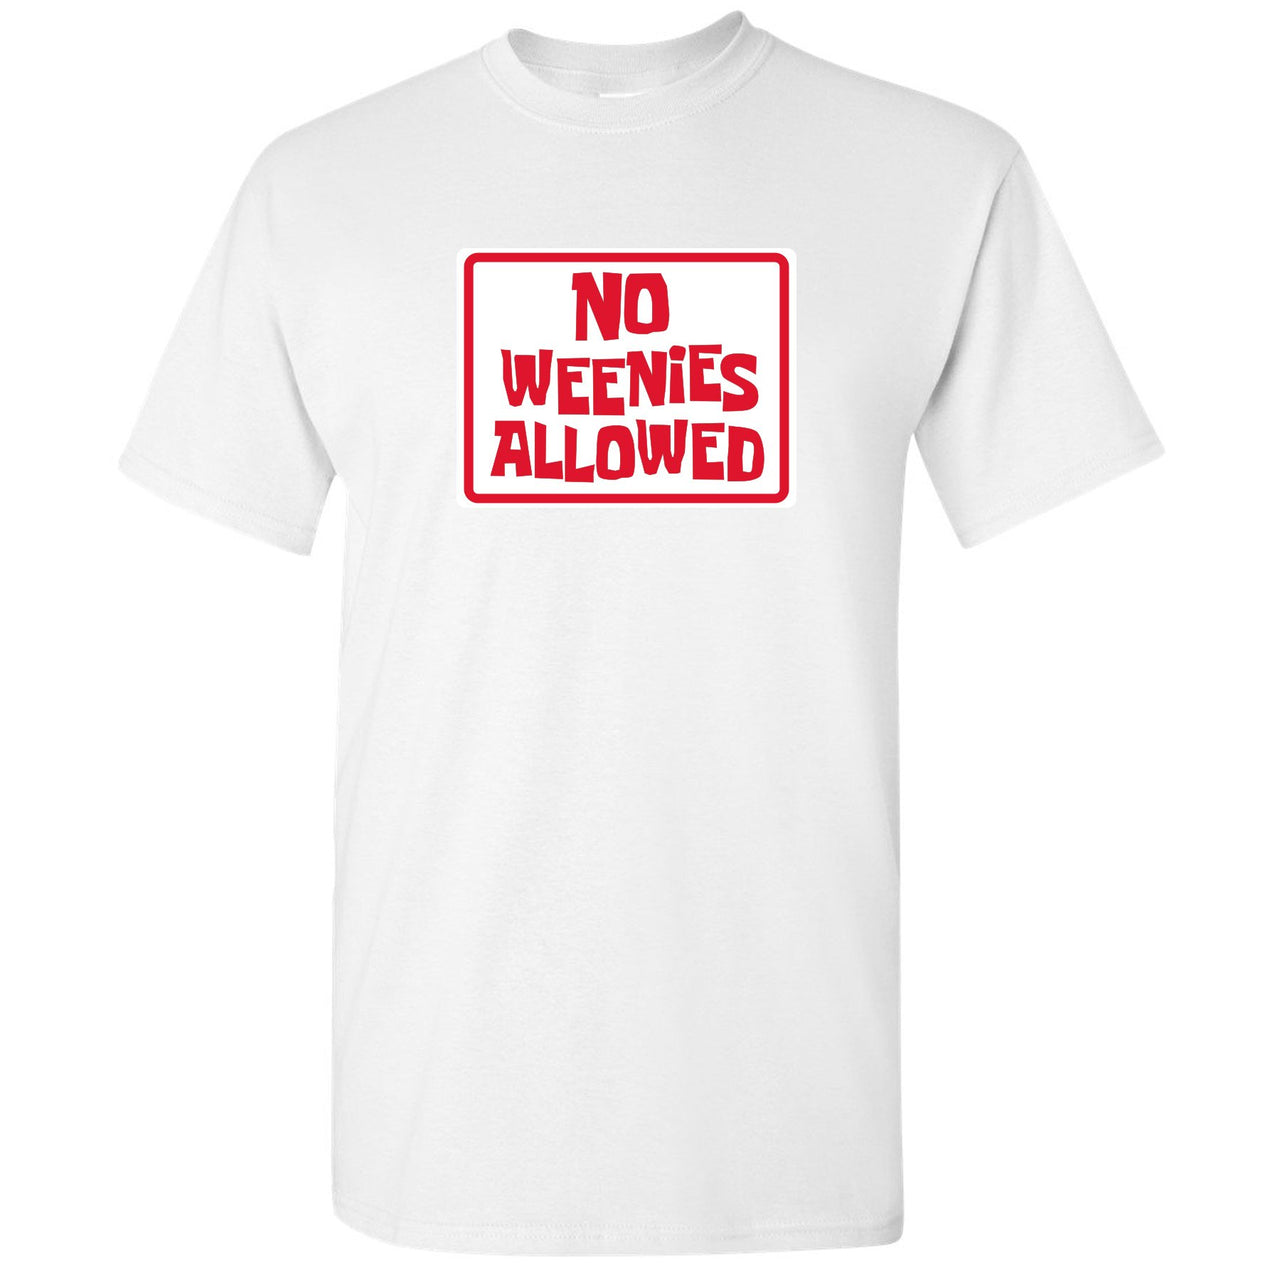 Patrick K5s T Shirt | No Weenies Allowed, White